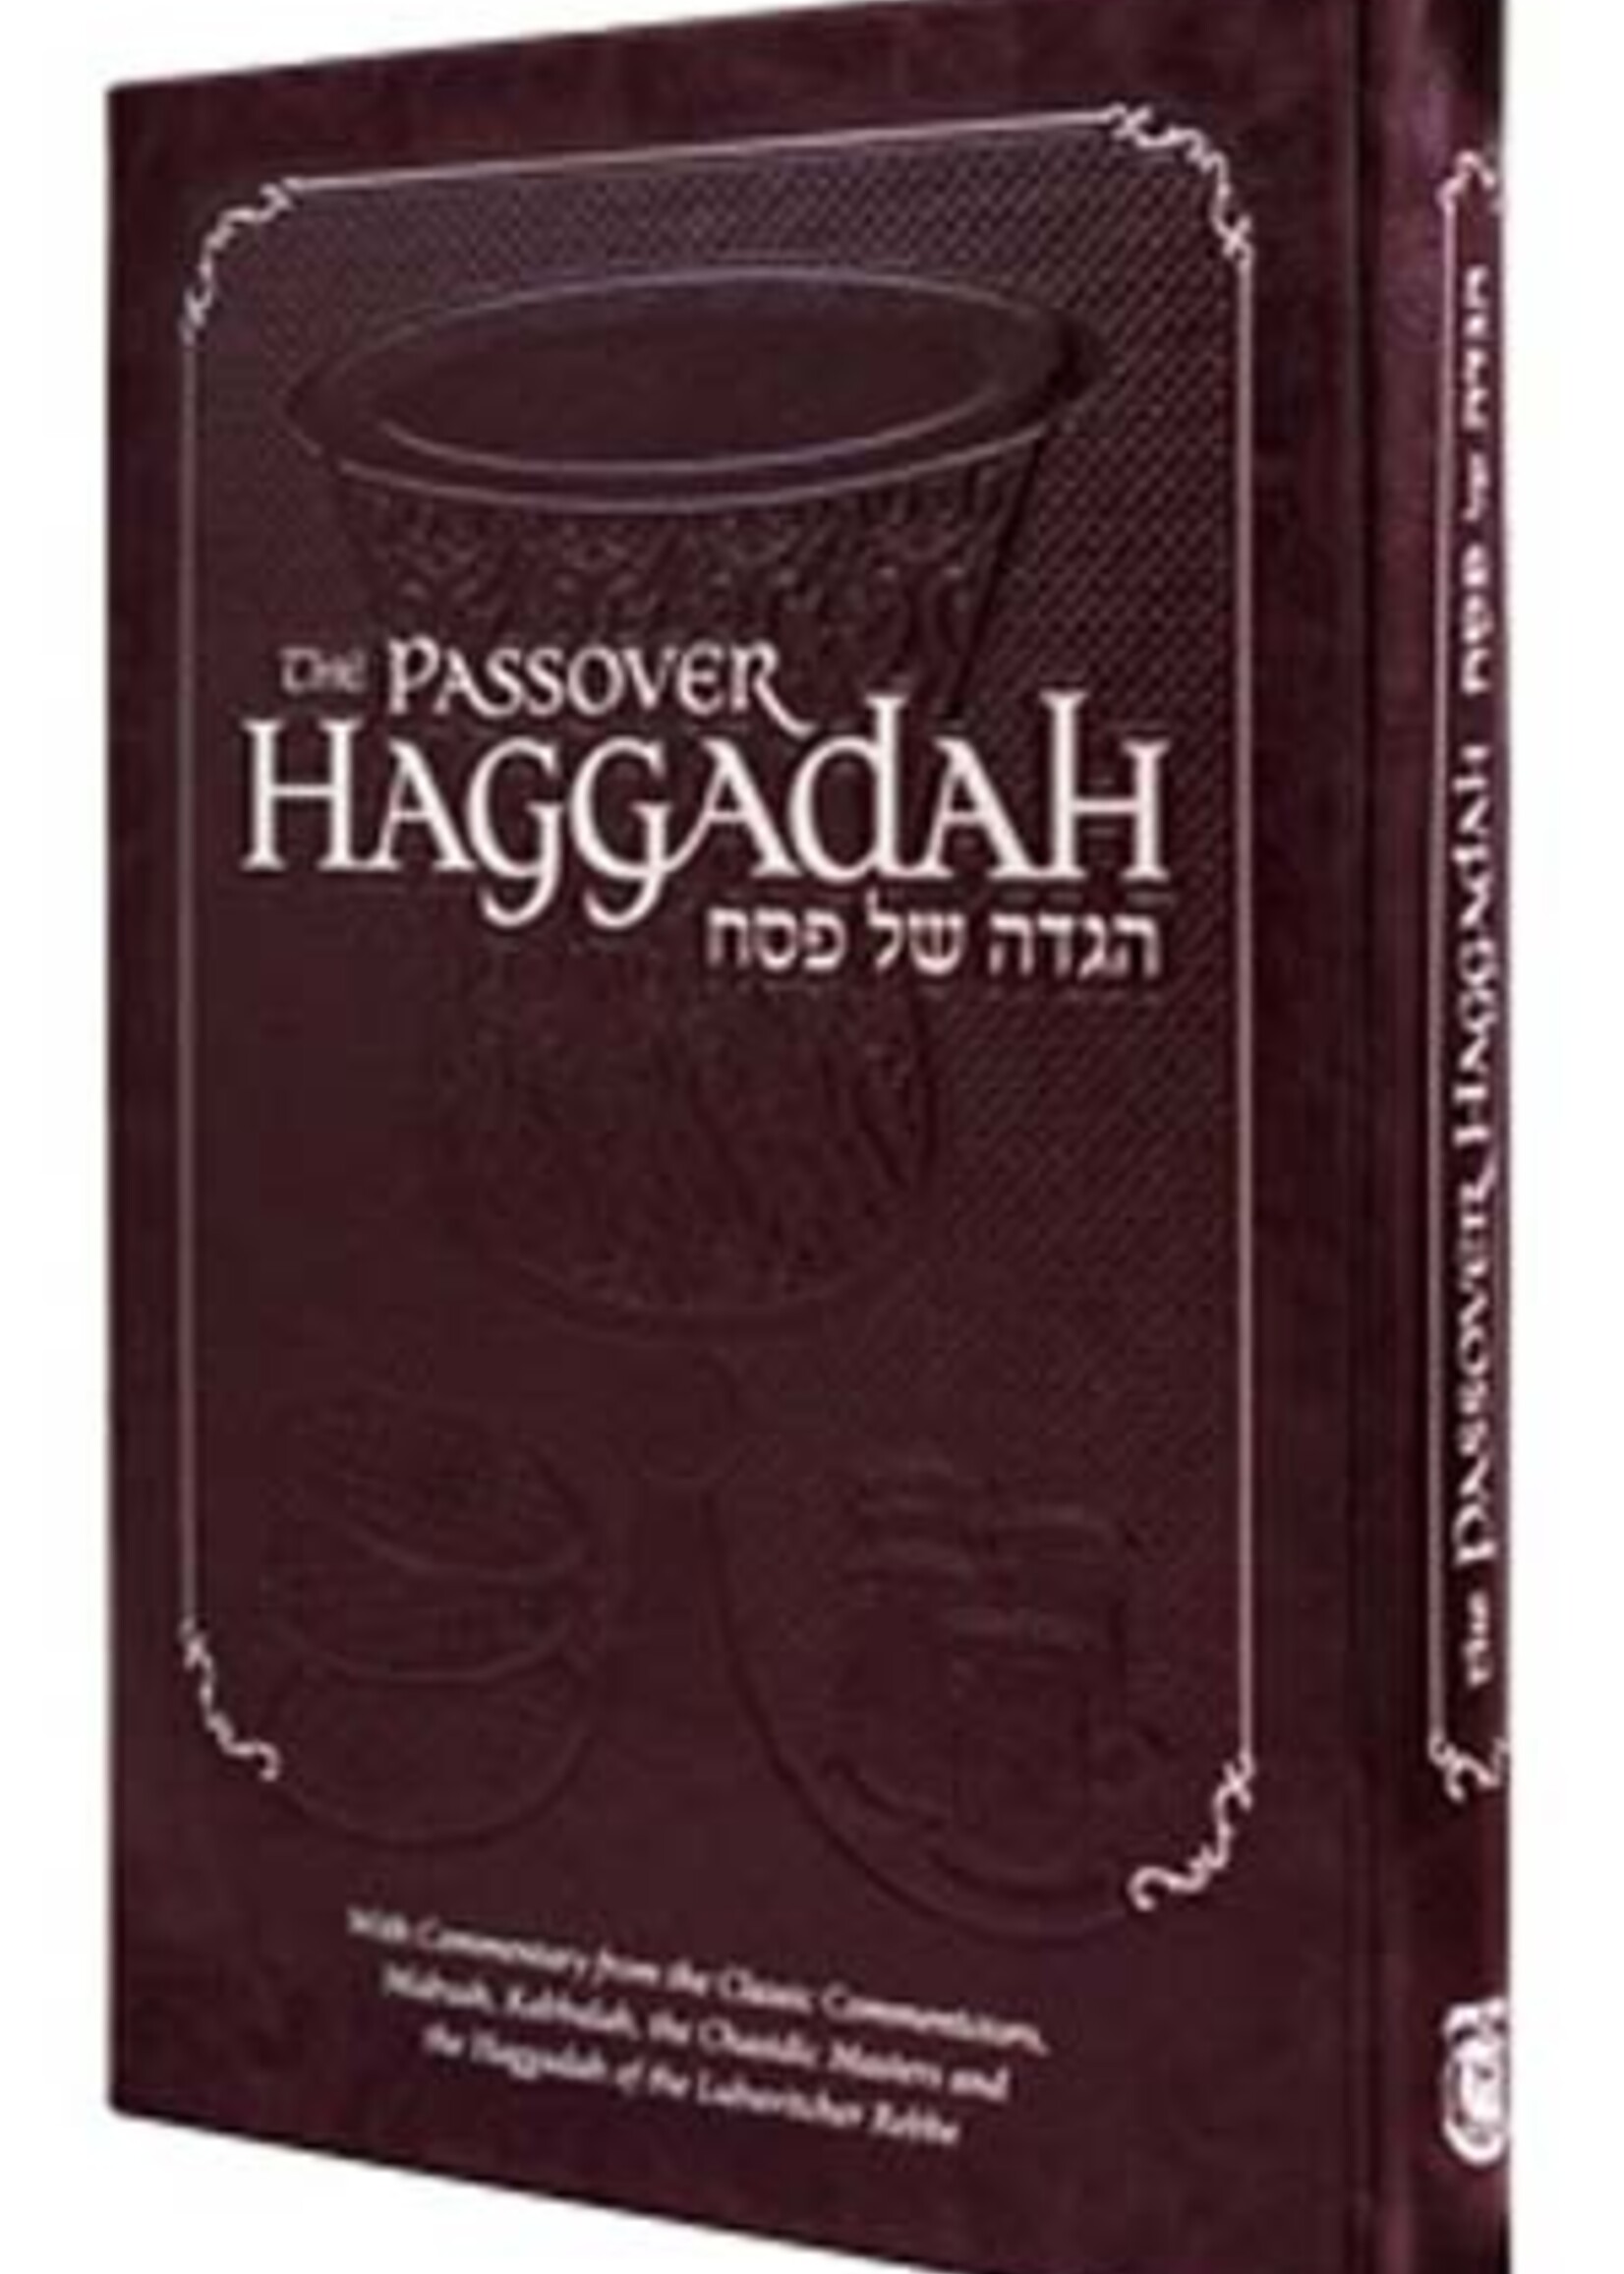 Rabbi Yosef Marcus The Passover Haggadah - Chabad / Lubavitch